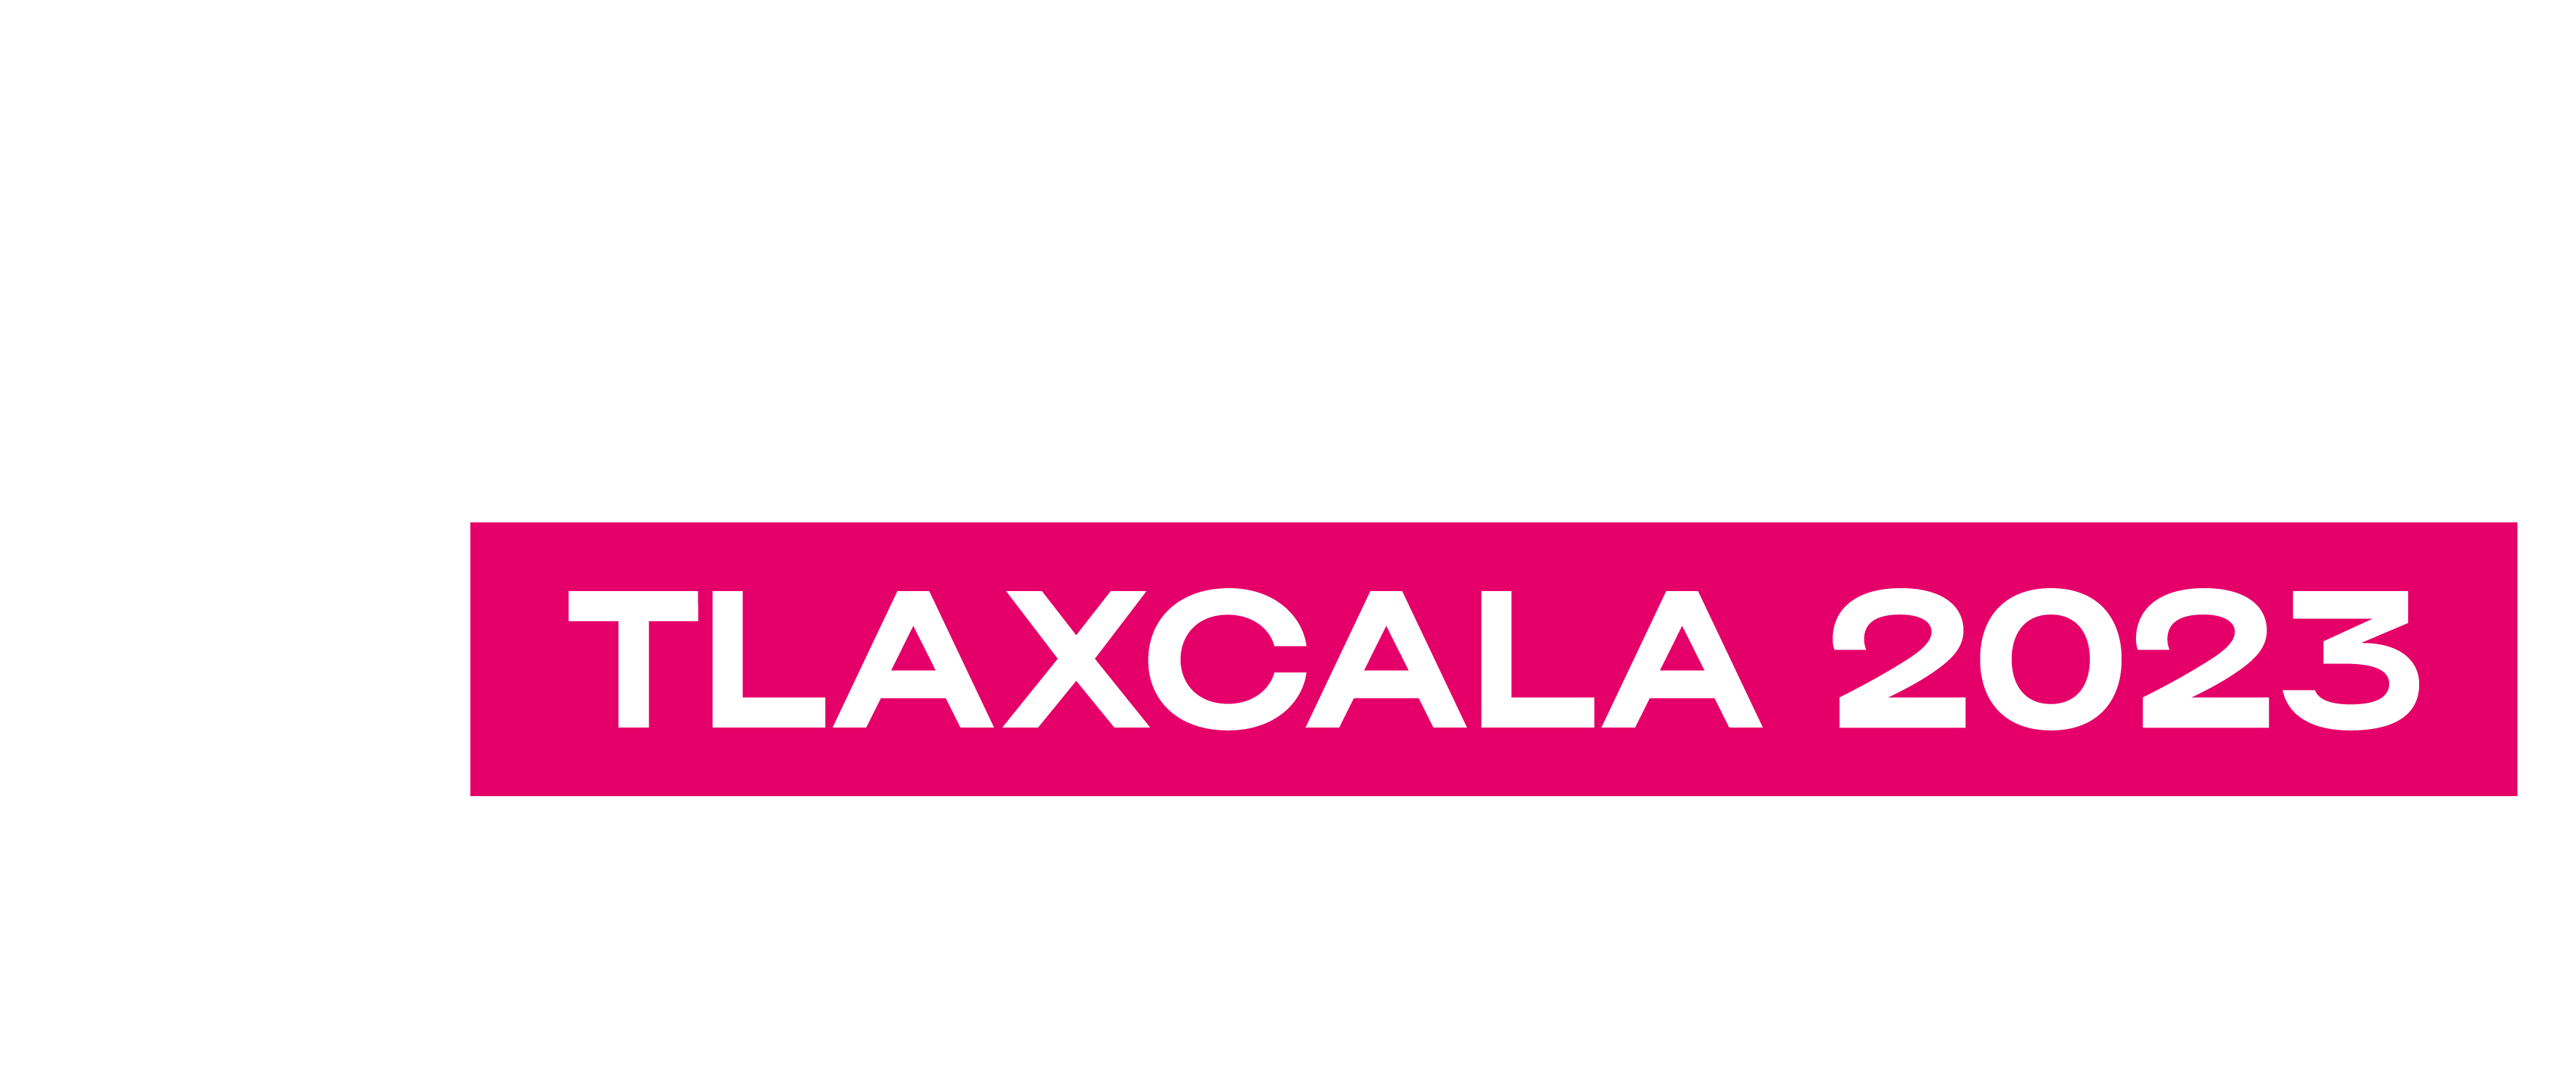 Competition Formula  volleyballworld.com